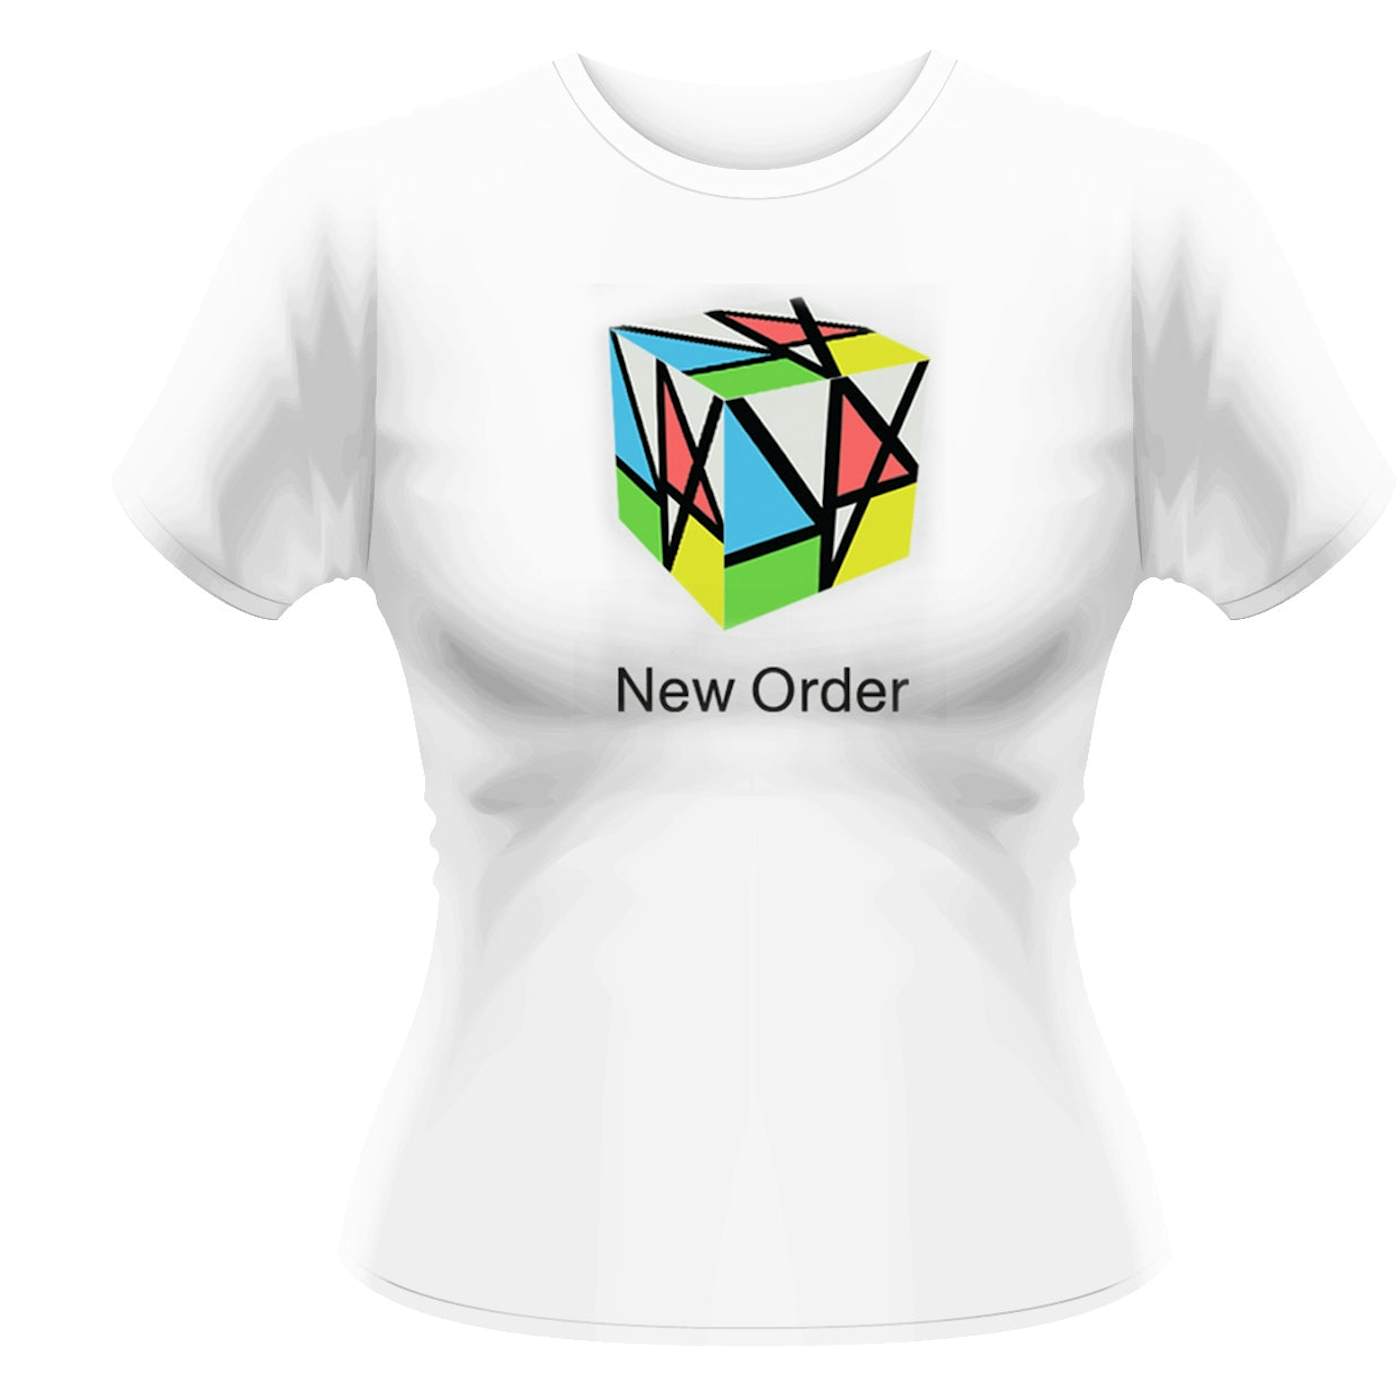 New Order Women's T Shirt - Rubix